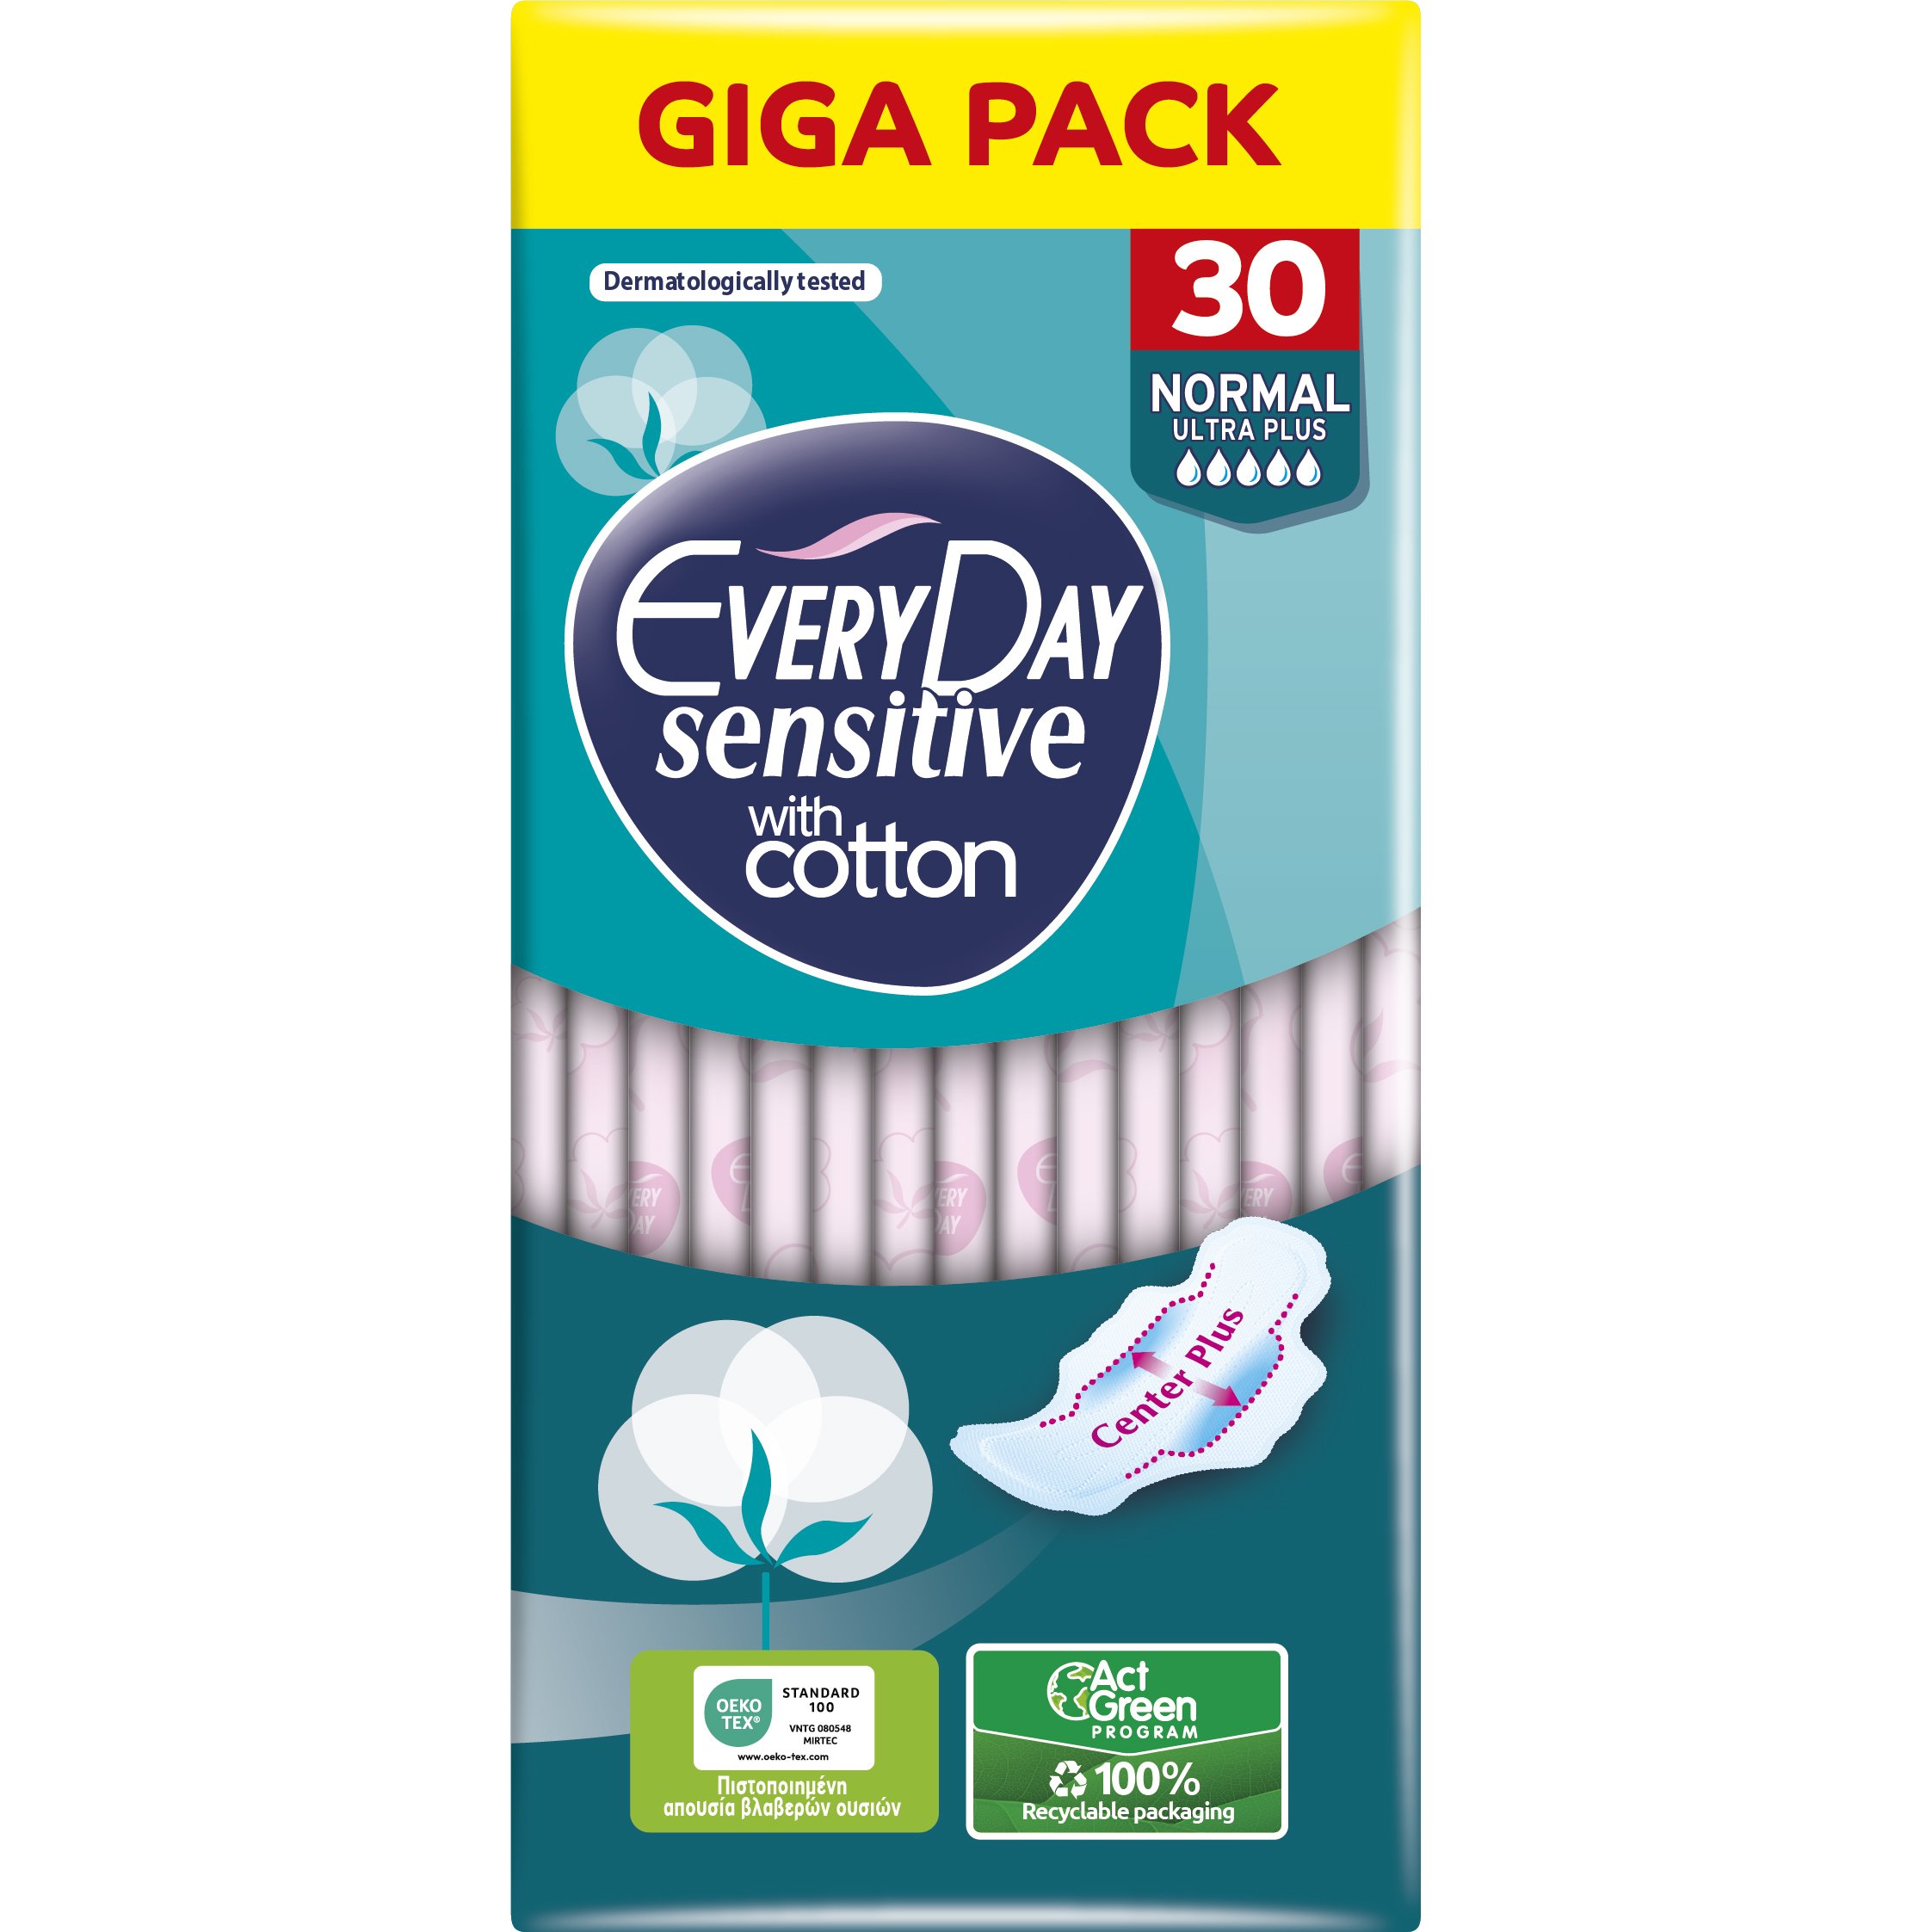 Every Day Sensitive with Cotton Normal Ultra Plus Giga Pack Κανονικού Μήκους Λεπτές Σερβιέτες, με Φτερά Προστασίας & Βαμβάκι για Μέγιστη Απορρόφηση Κατά των Ερεθισμών 30 Τεμάχια